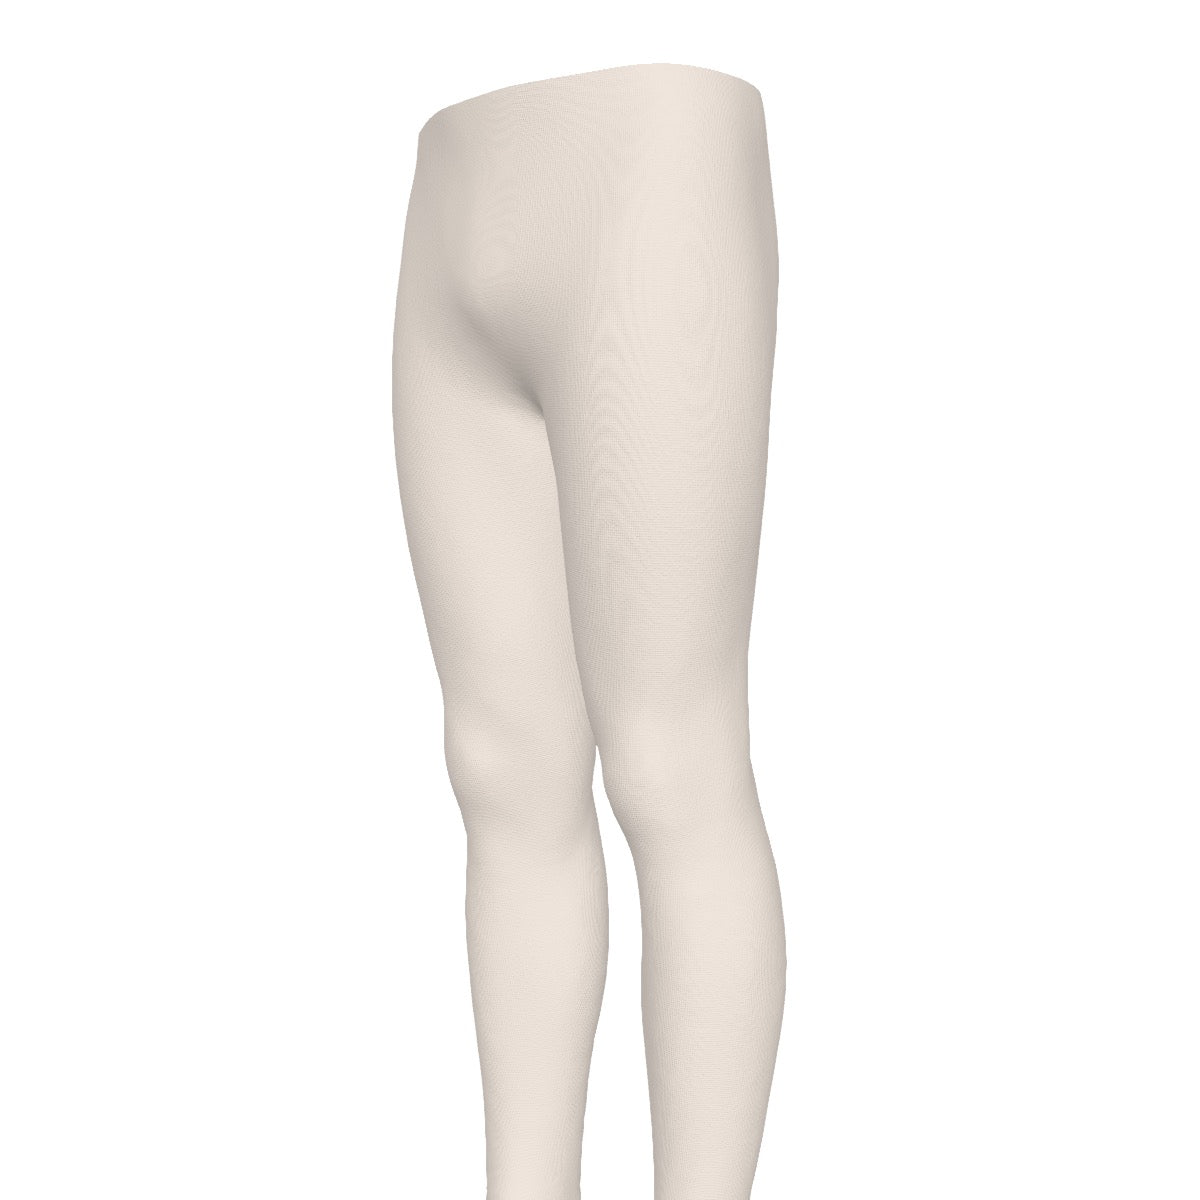 NUDETONE Light Cream Men's leggings | CANAANWEAR | Men's Leggings |